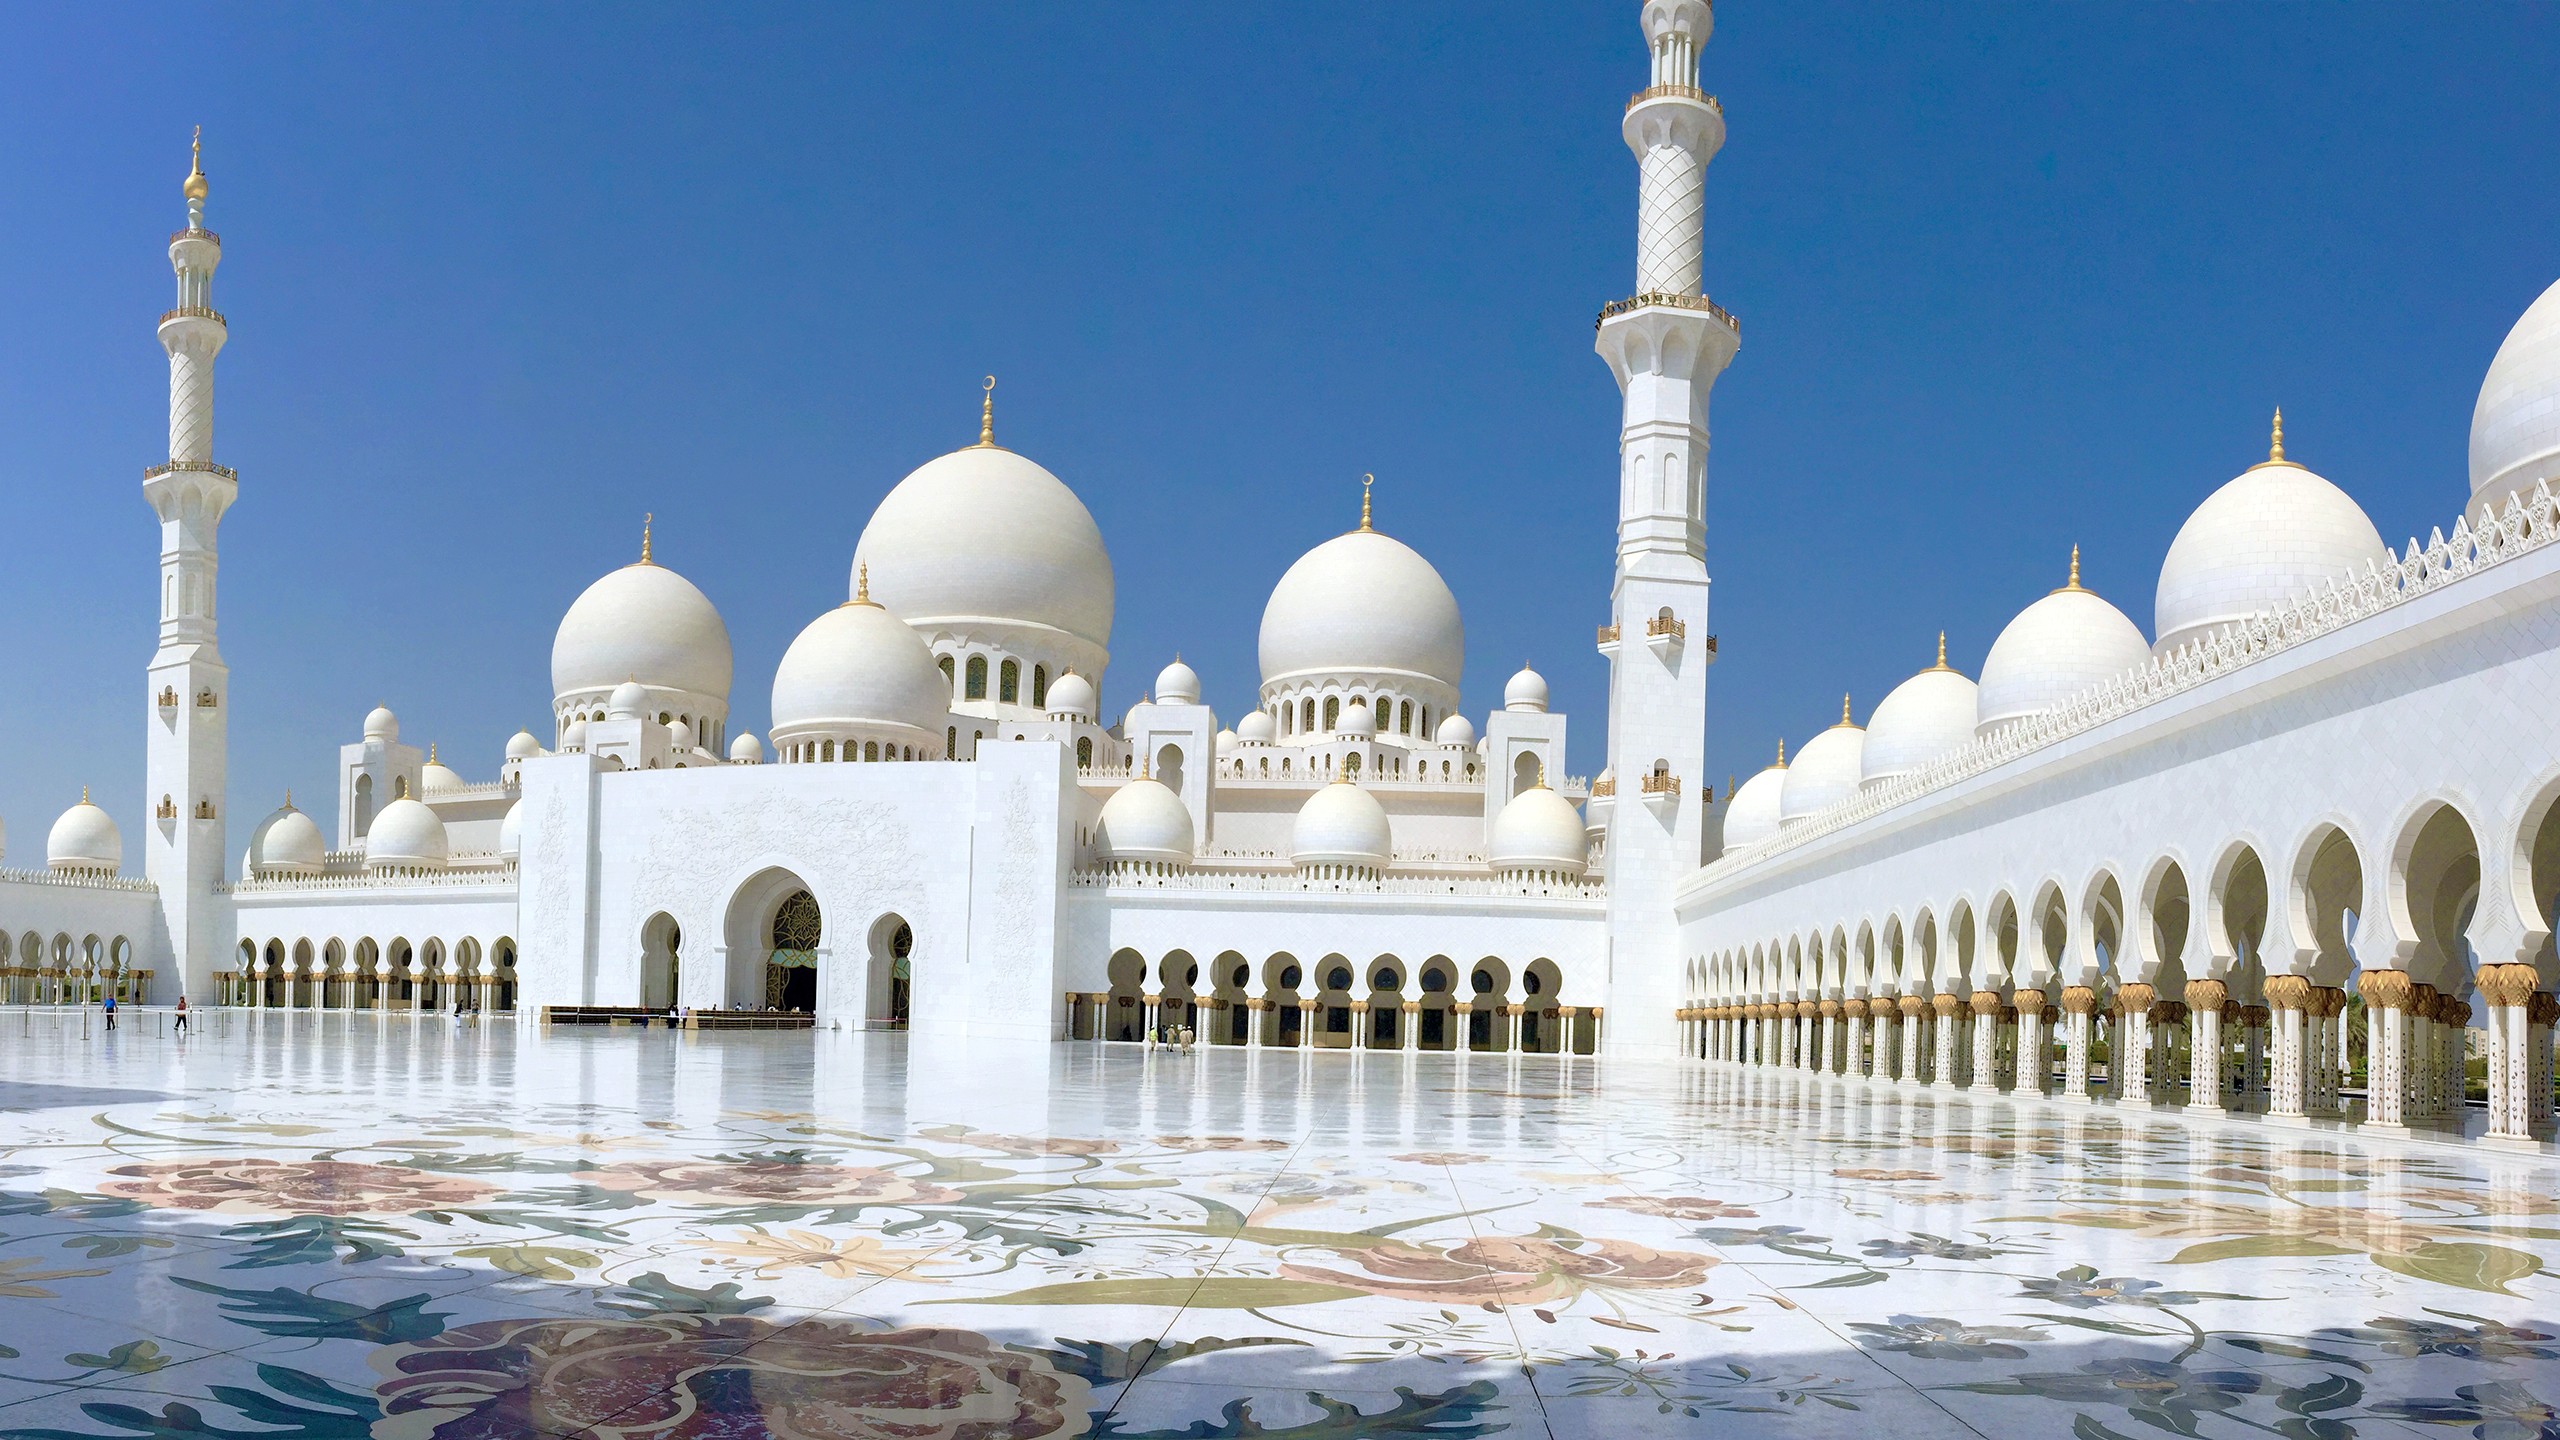 General 2560x1440 Abu Dhabi Islamic architecture architecture sunlight arch marble mosque landmark United Arab Emirates